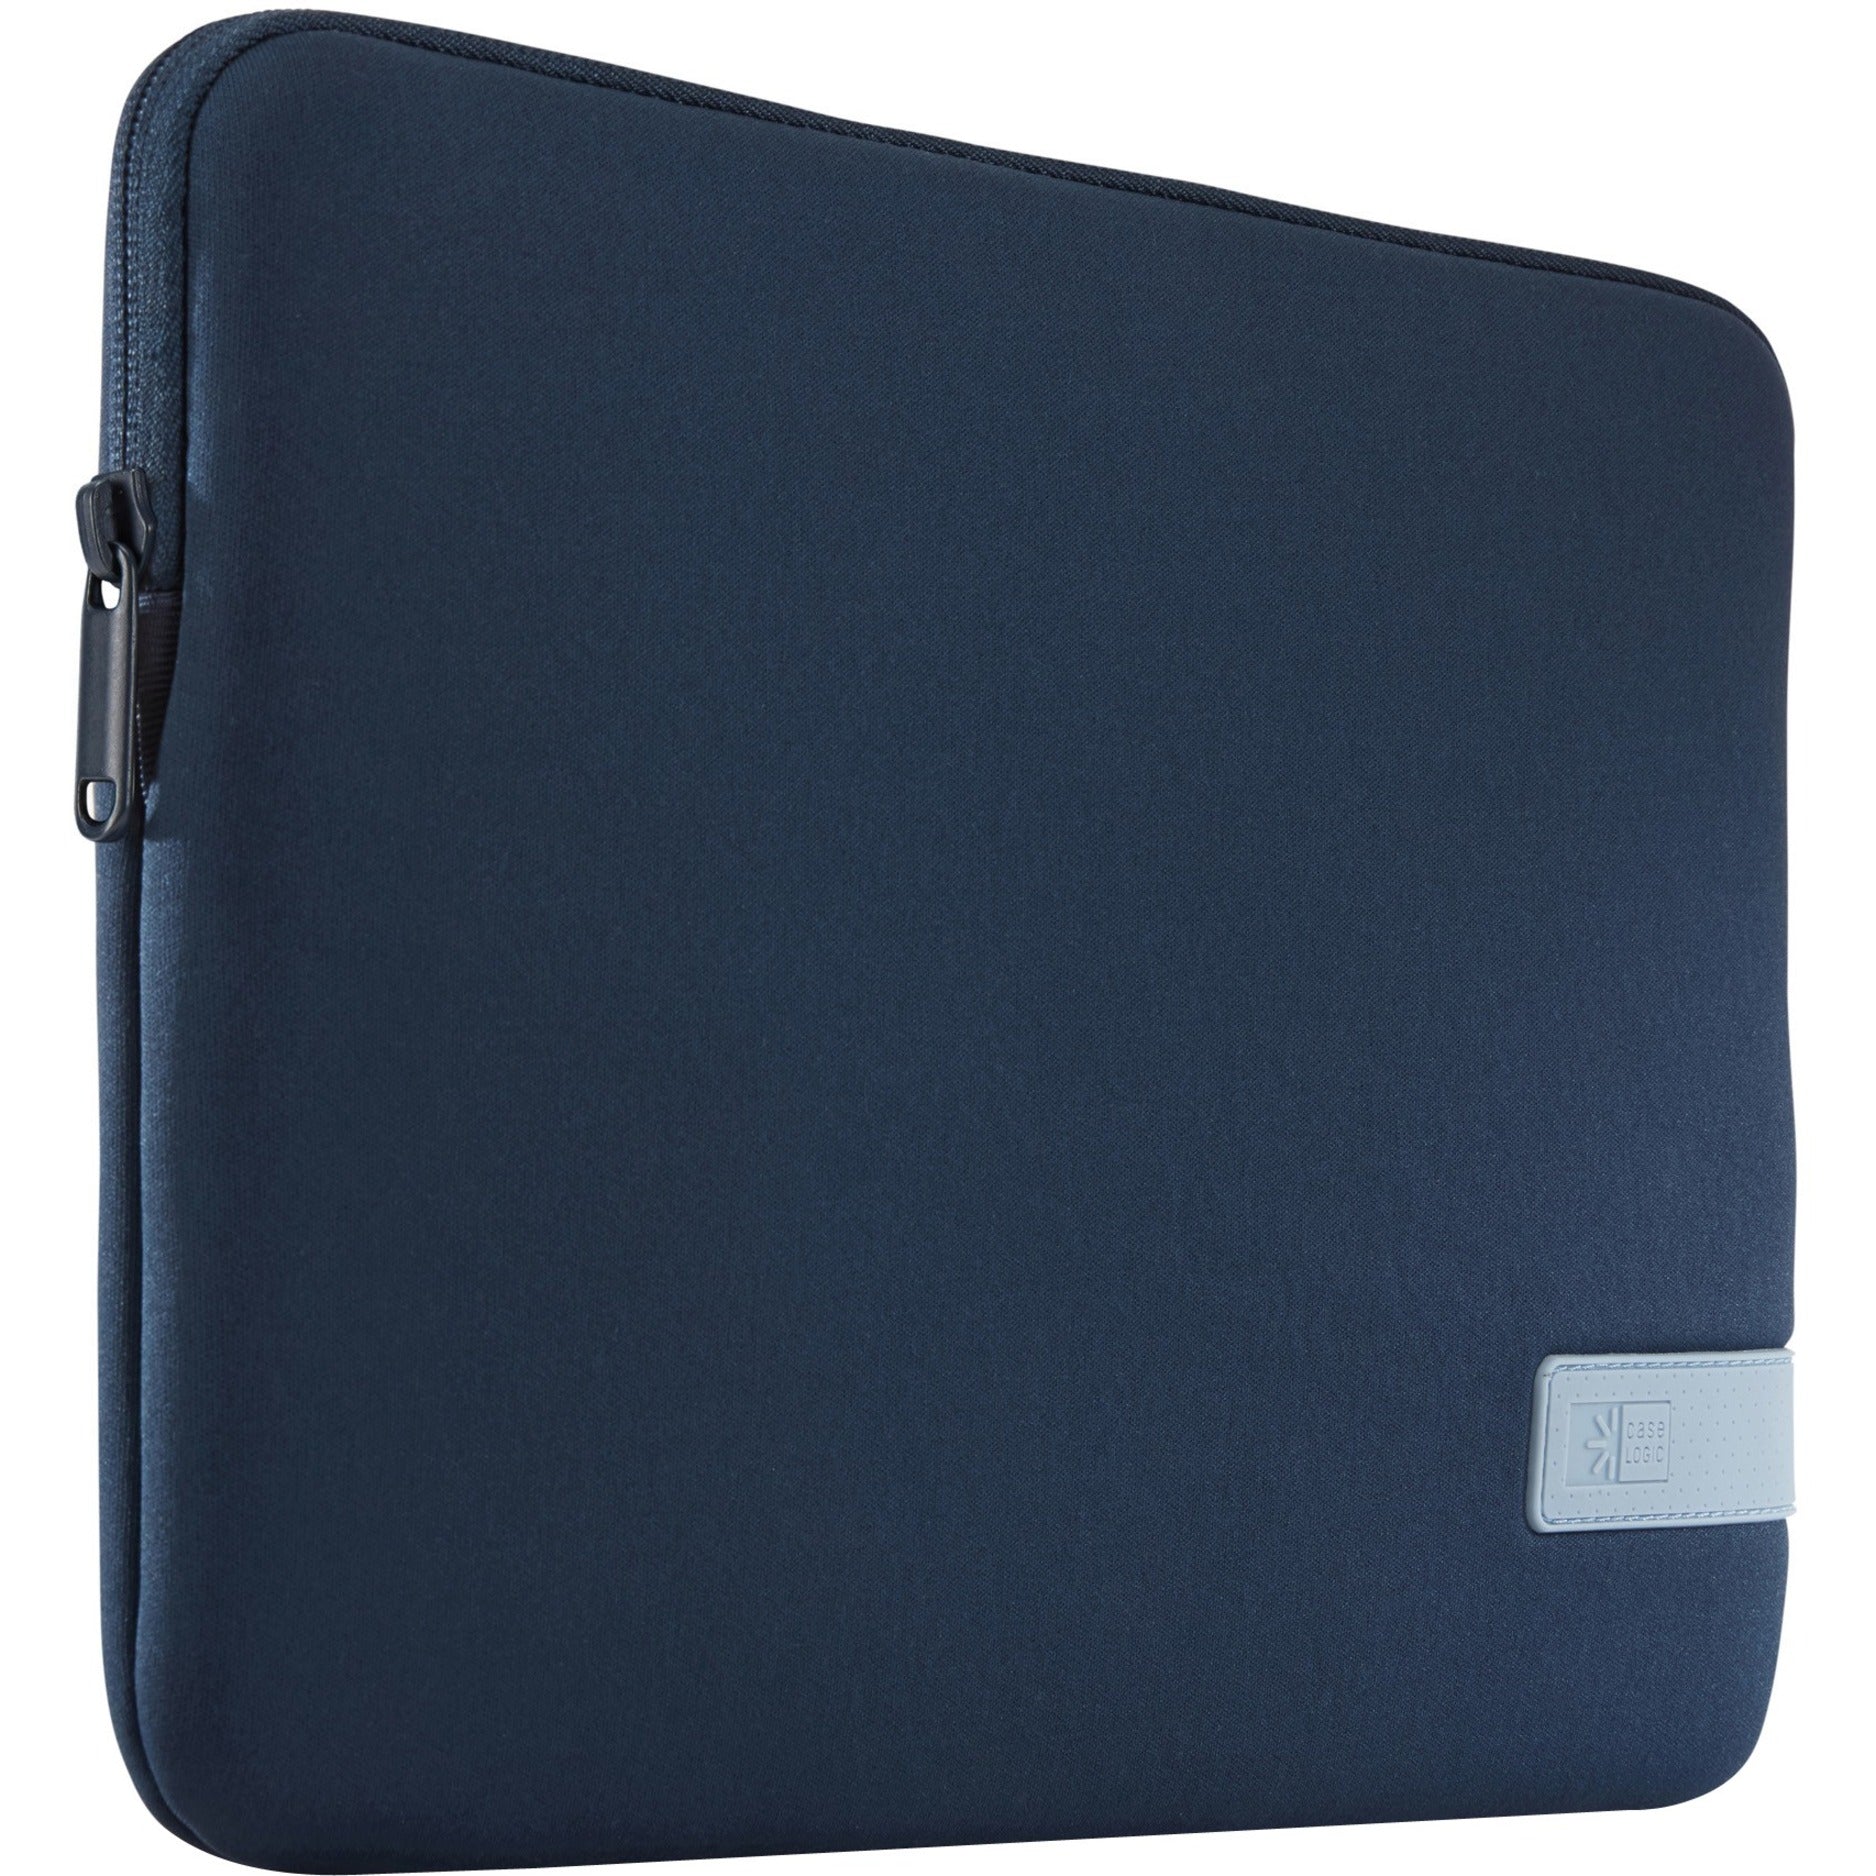 Case Logic 3203956 Reflect 13" MacBook Pro Sleeve, Dark Blue Memory Foam Carrying Case